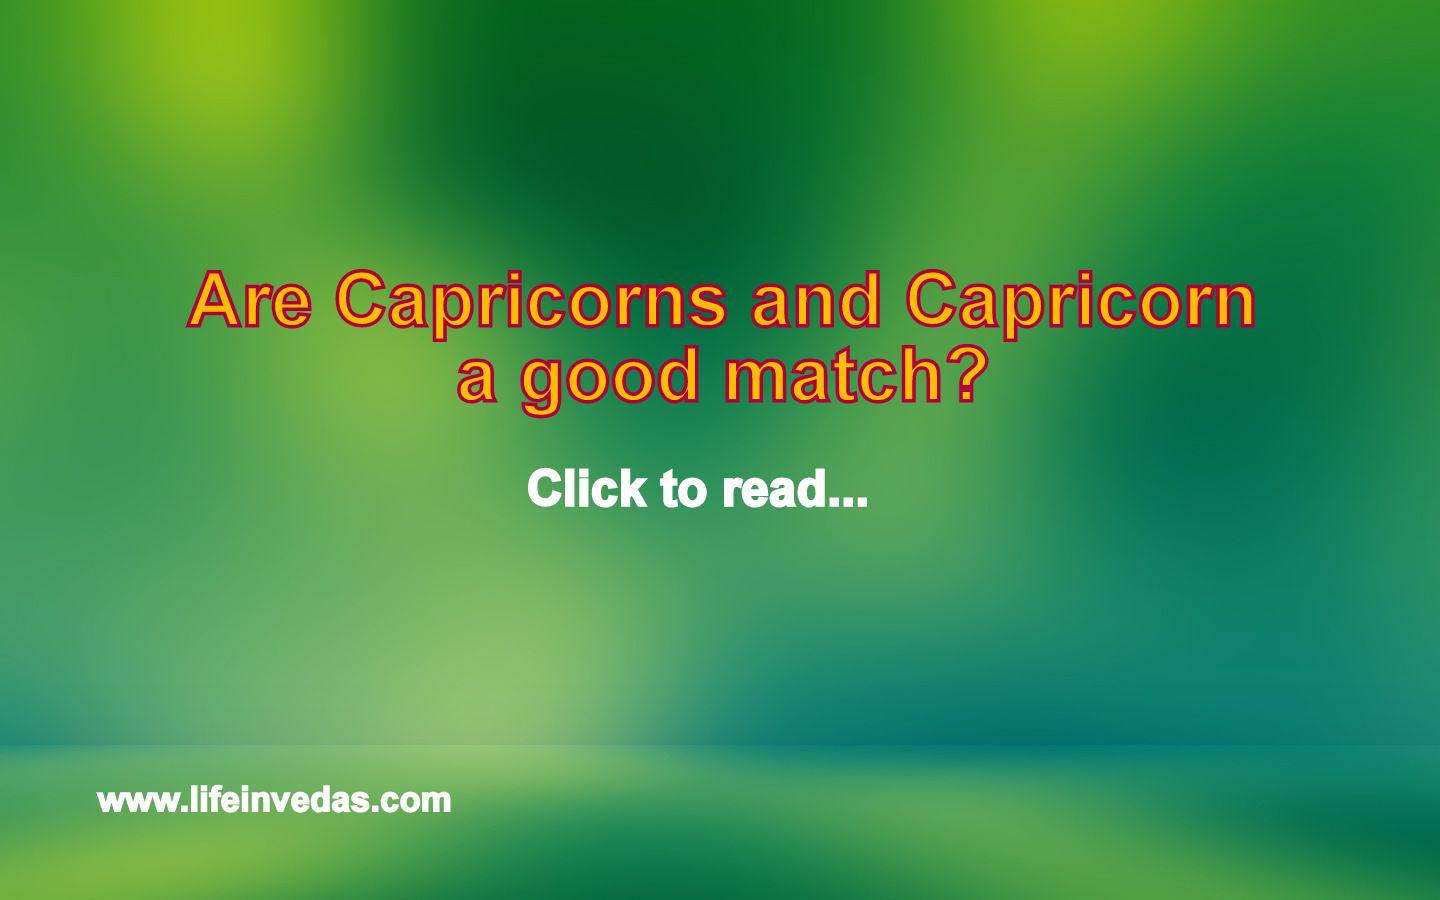 Capricorn and Capricorn